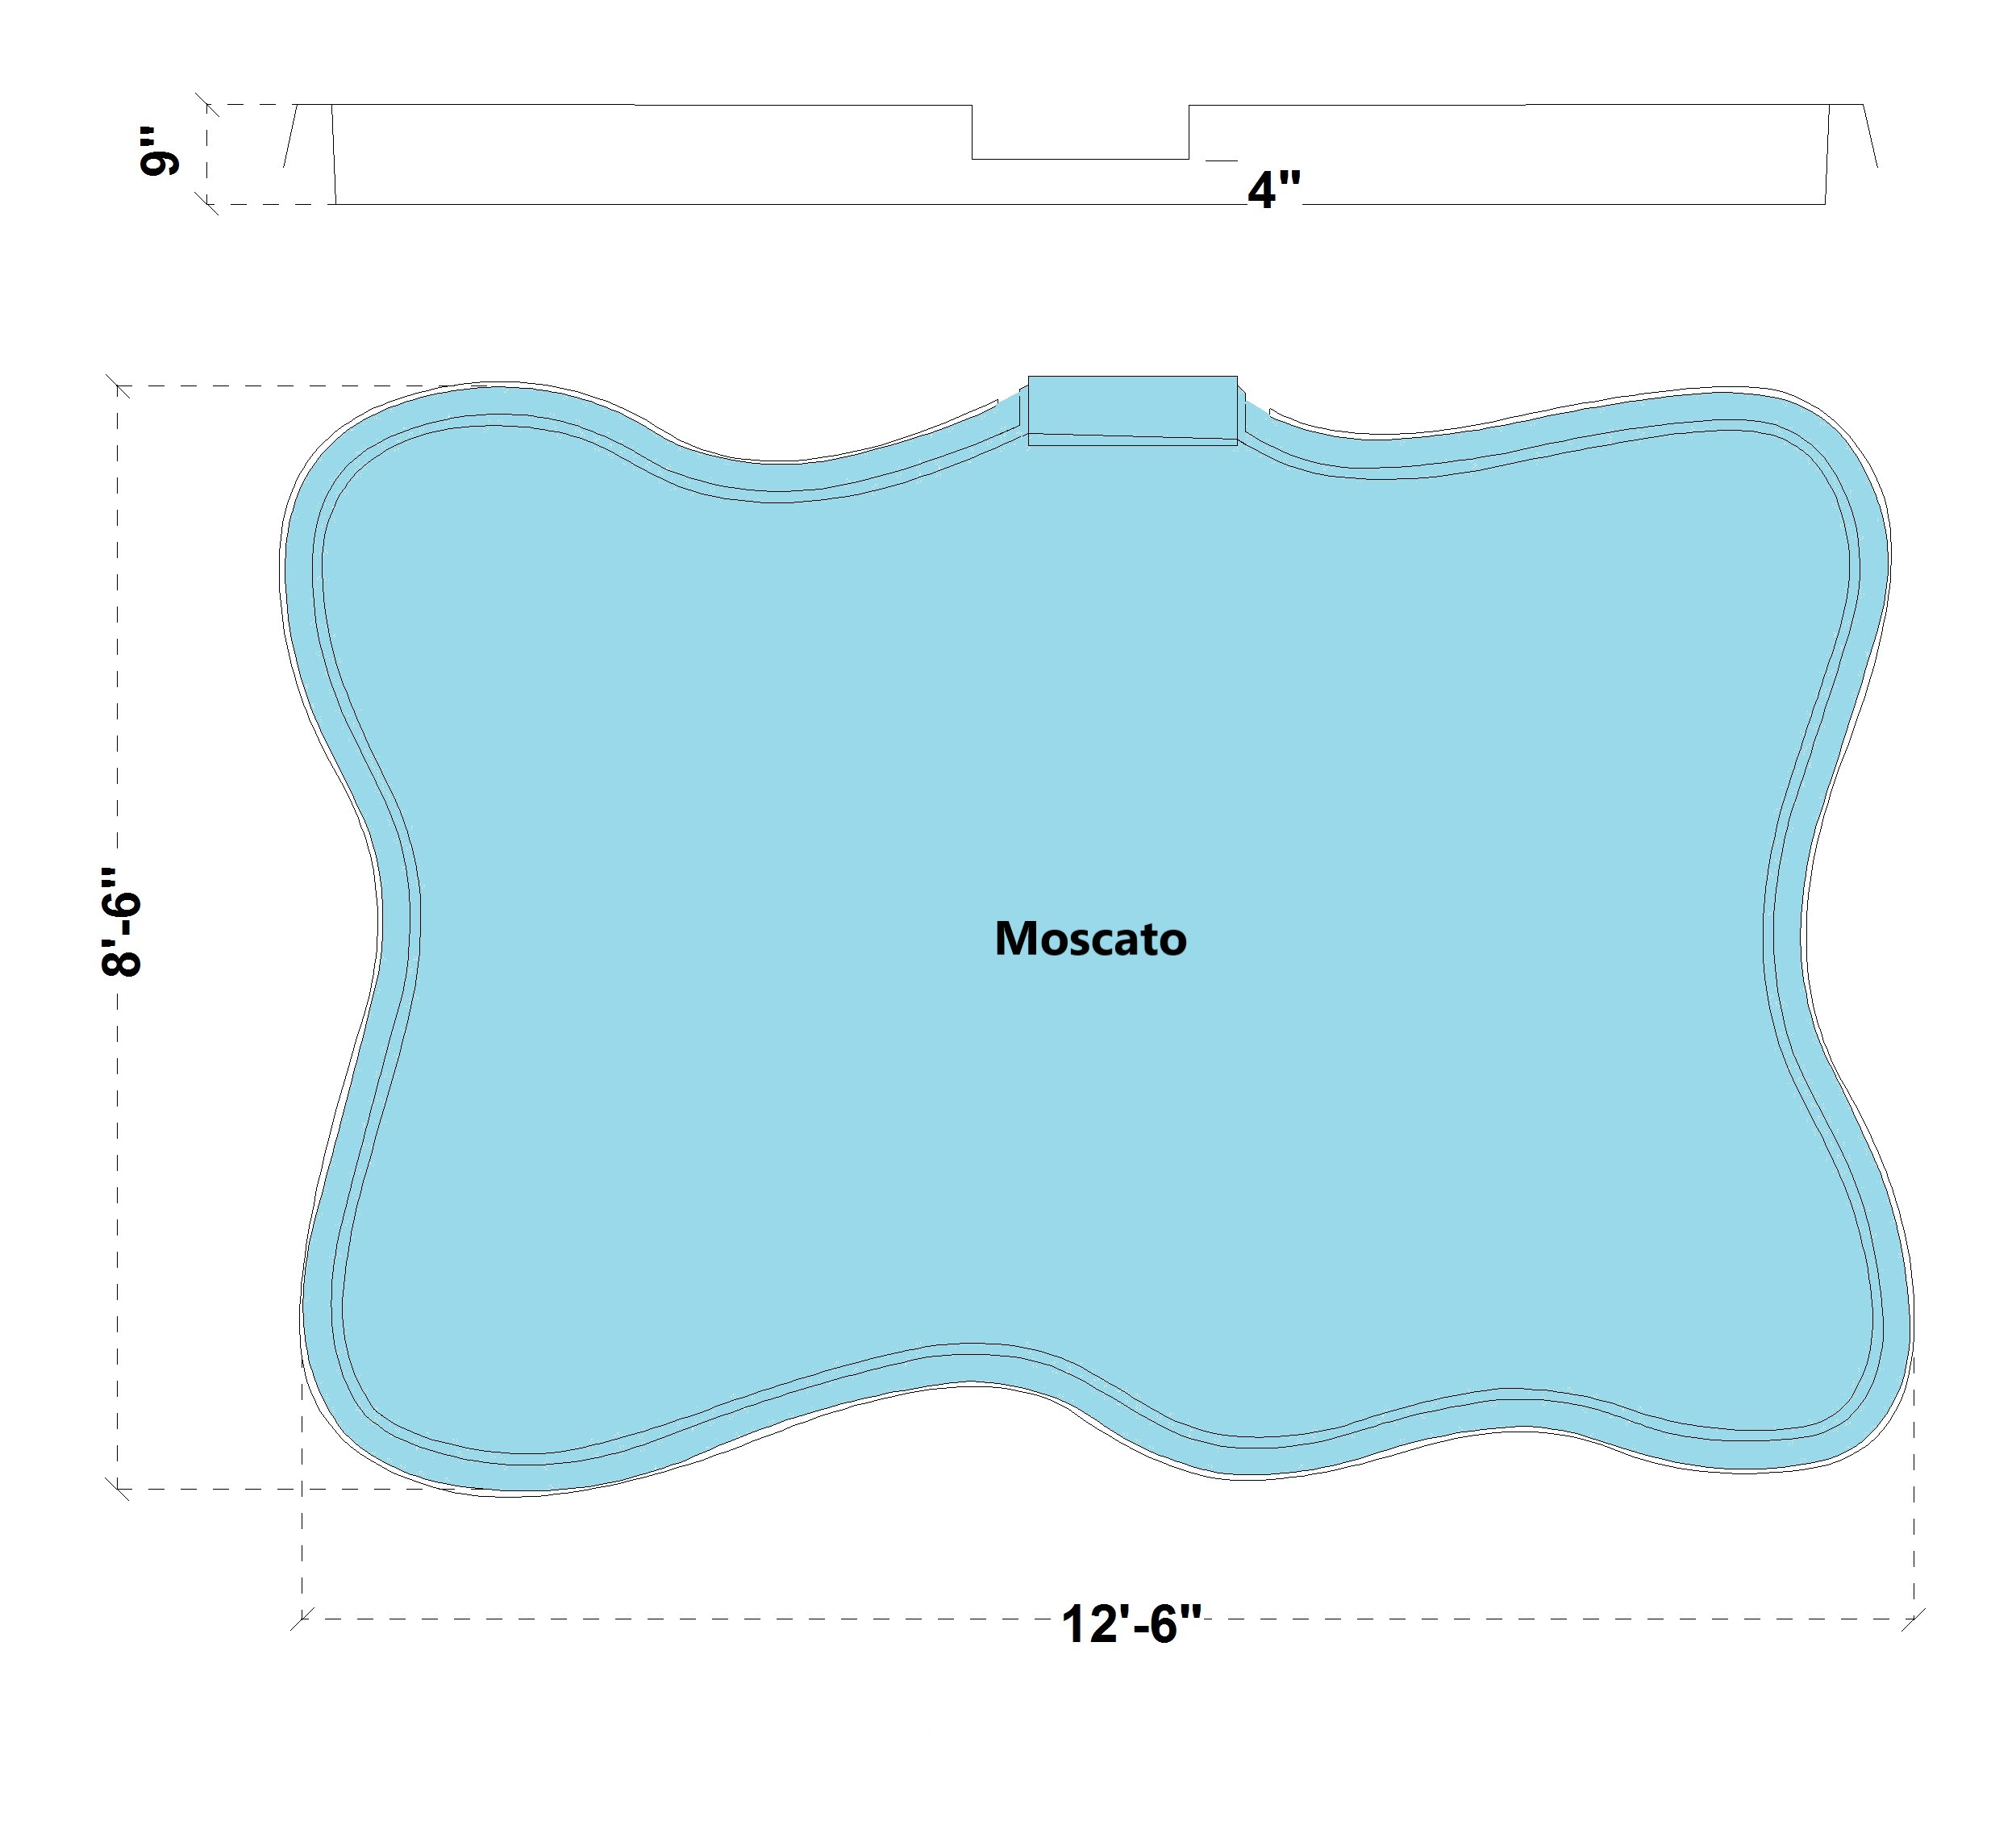 Moscato Fiberglass Pool Diagram